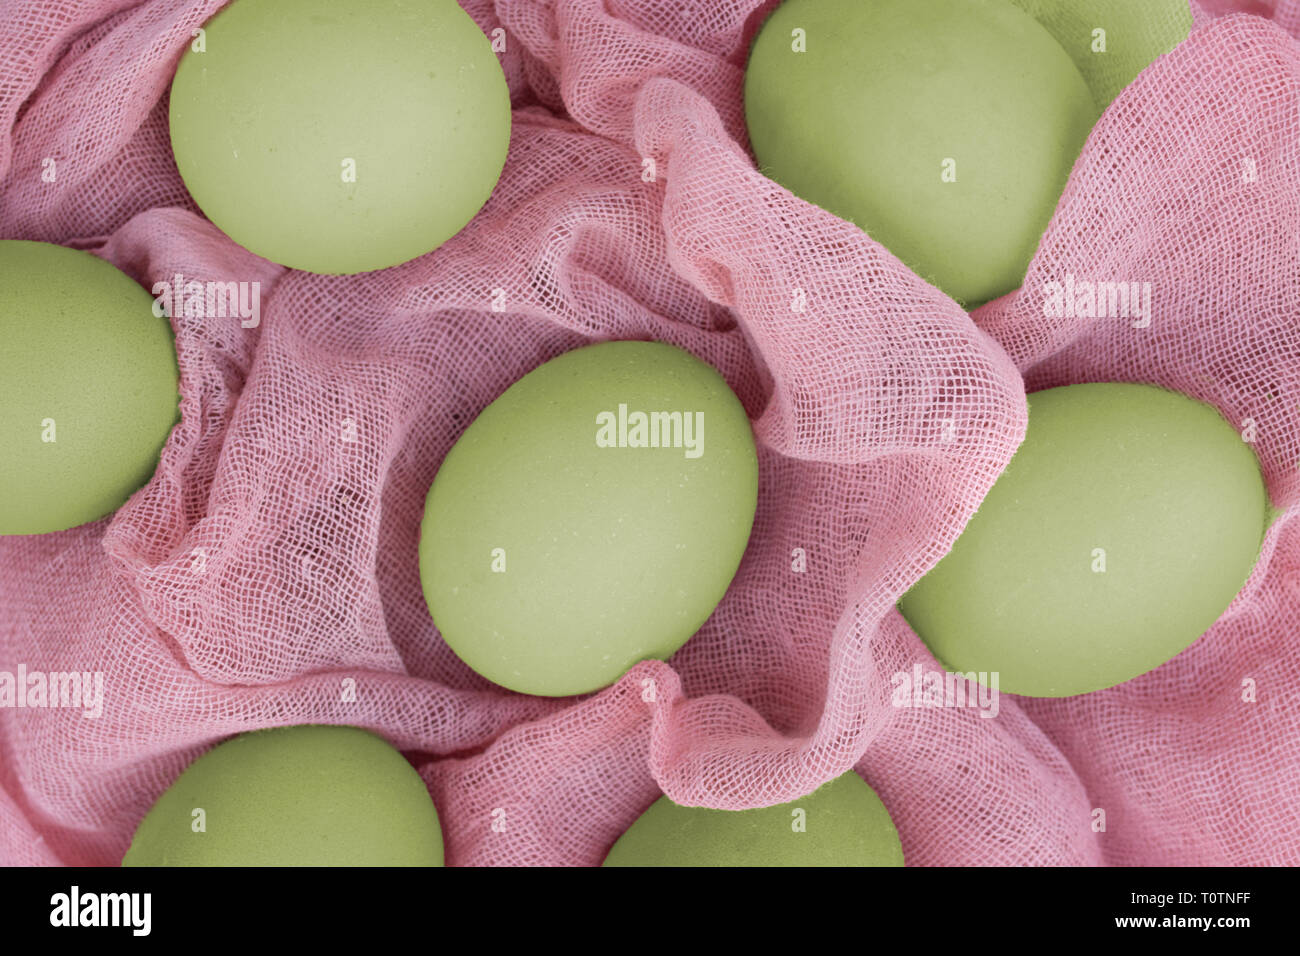 Huevos de Pascua verde de paño de color rosa. Foto de stock